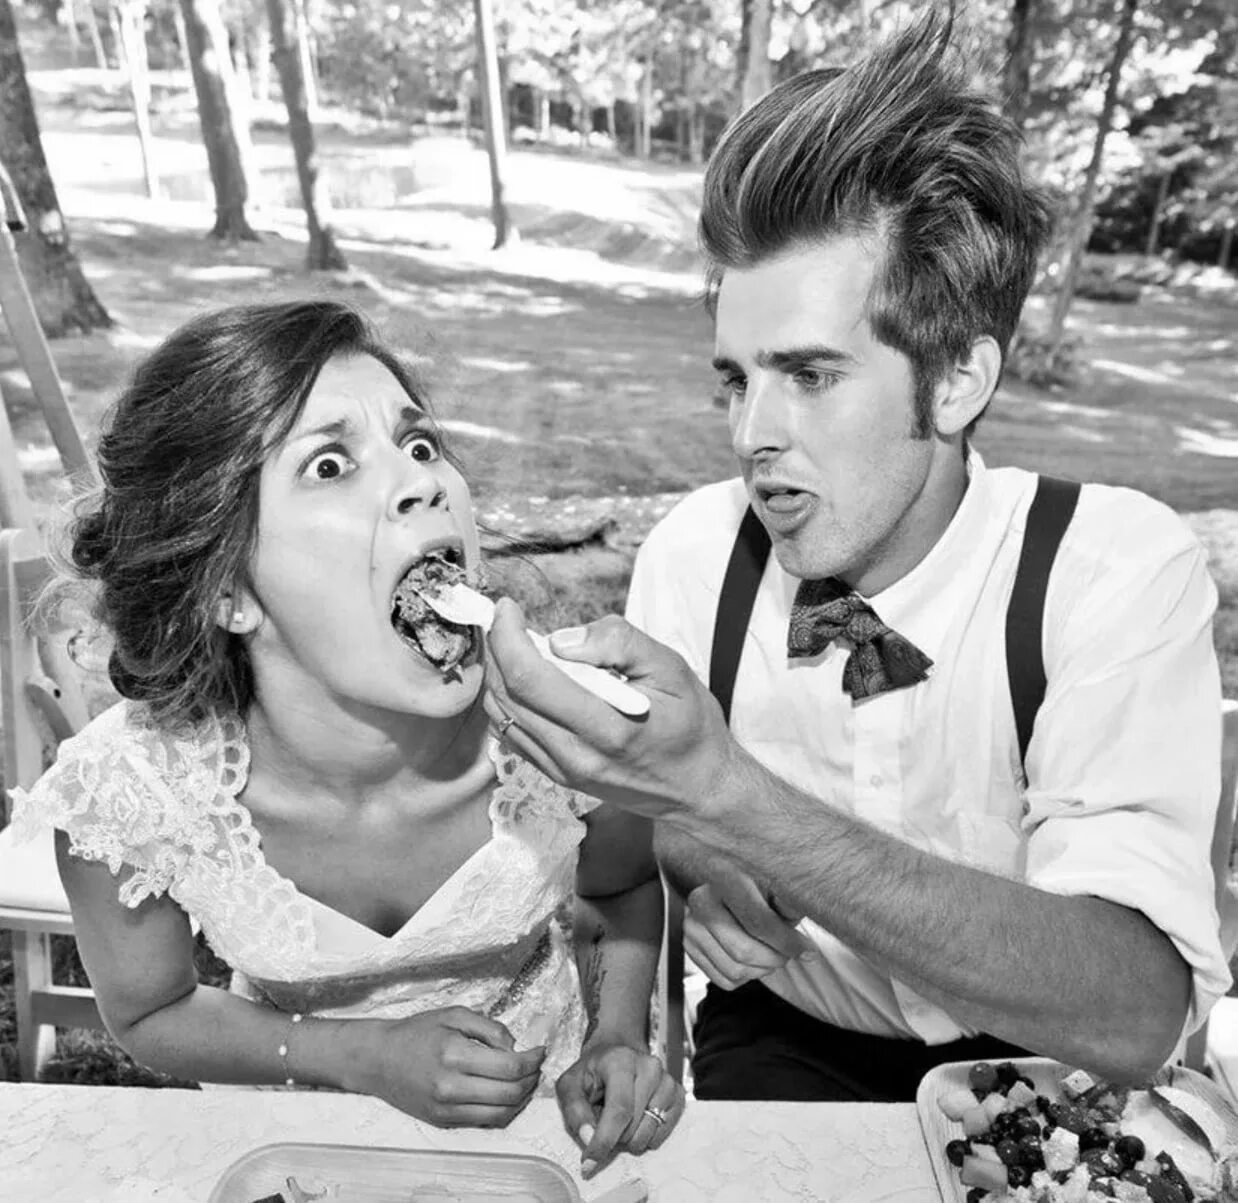 Кормит с ложки девушку. Парень и девушка мороженое. Девушка кормит парня с ложечки. Рука которая кормит.